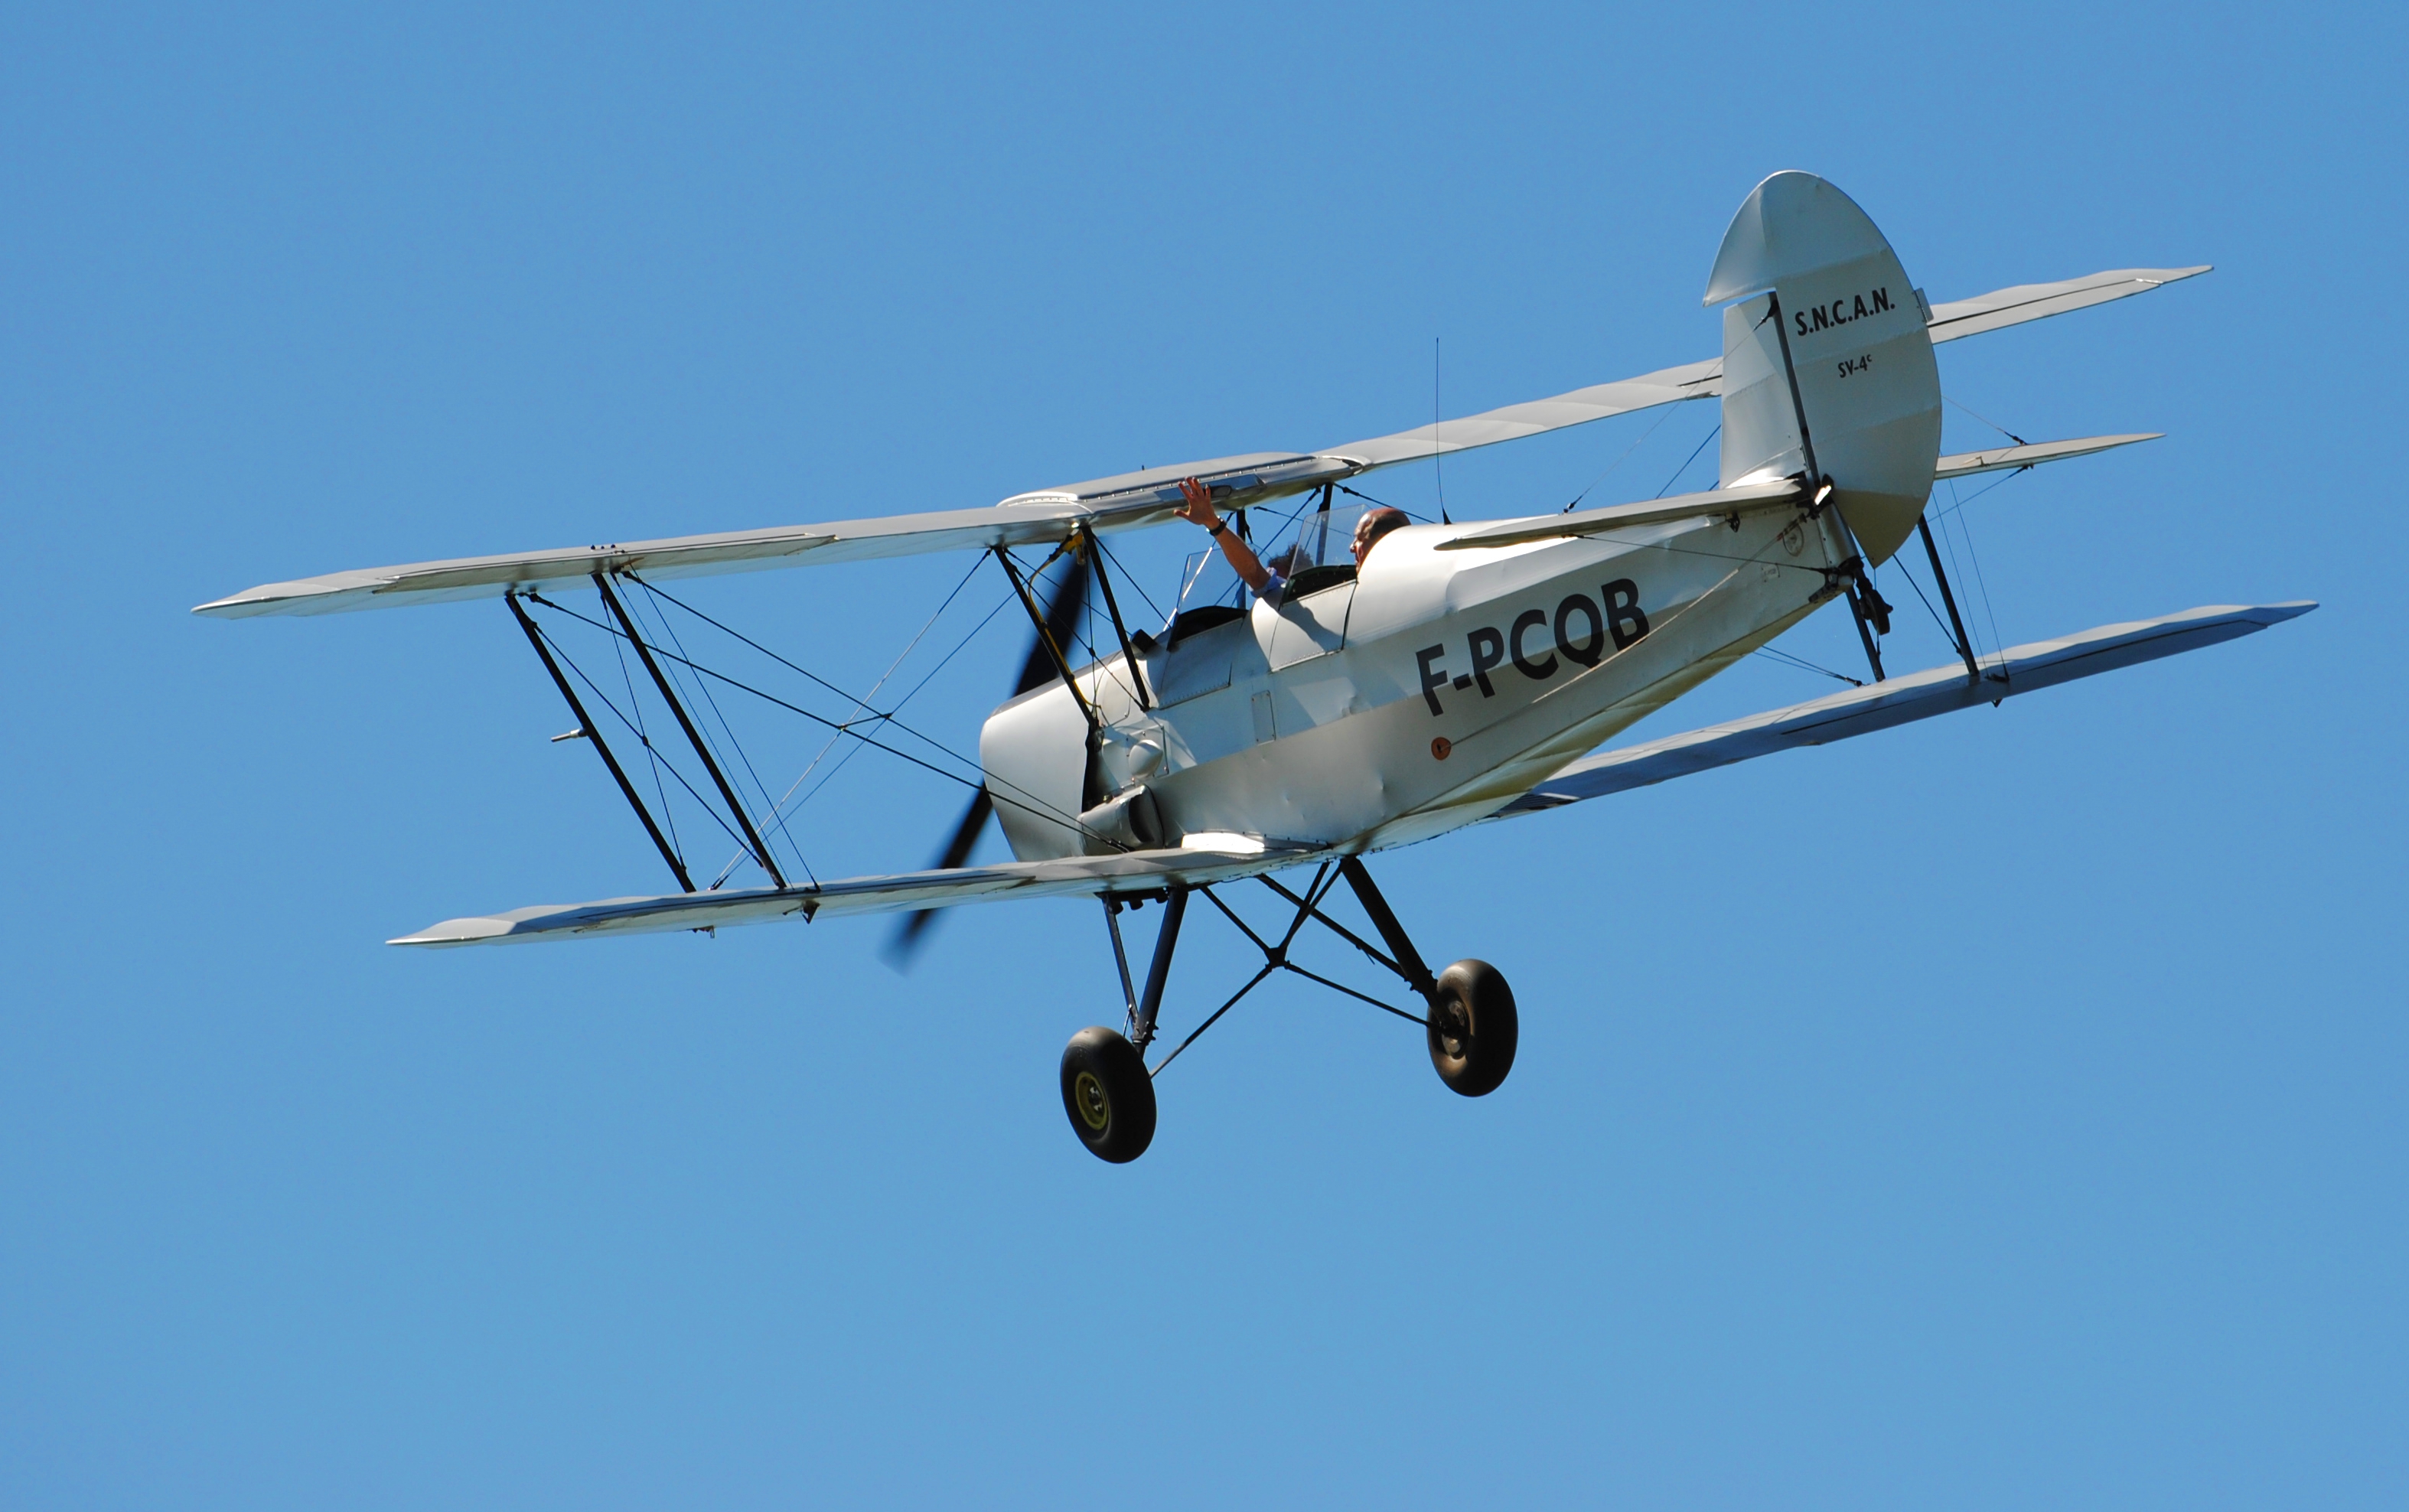 File:Snc-biplane-aircraft.jpg - Wikimedia Commons